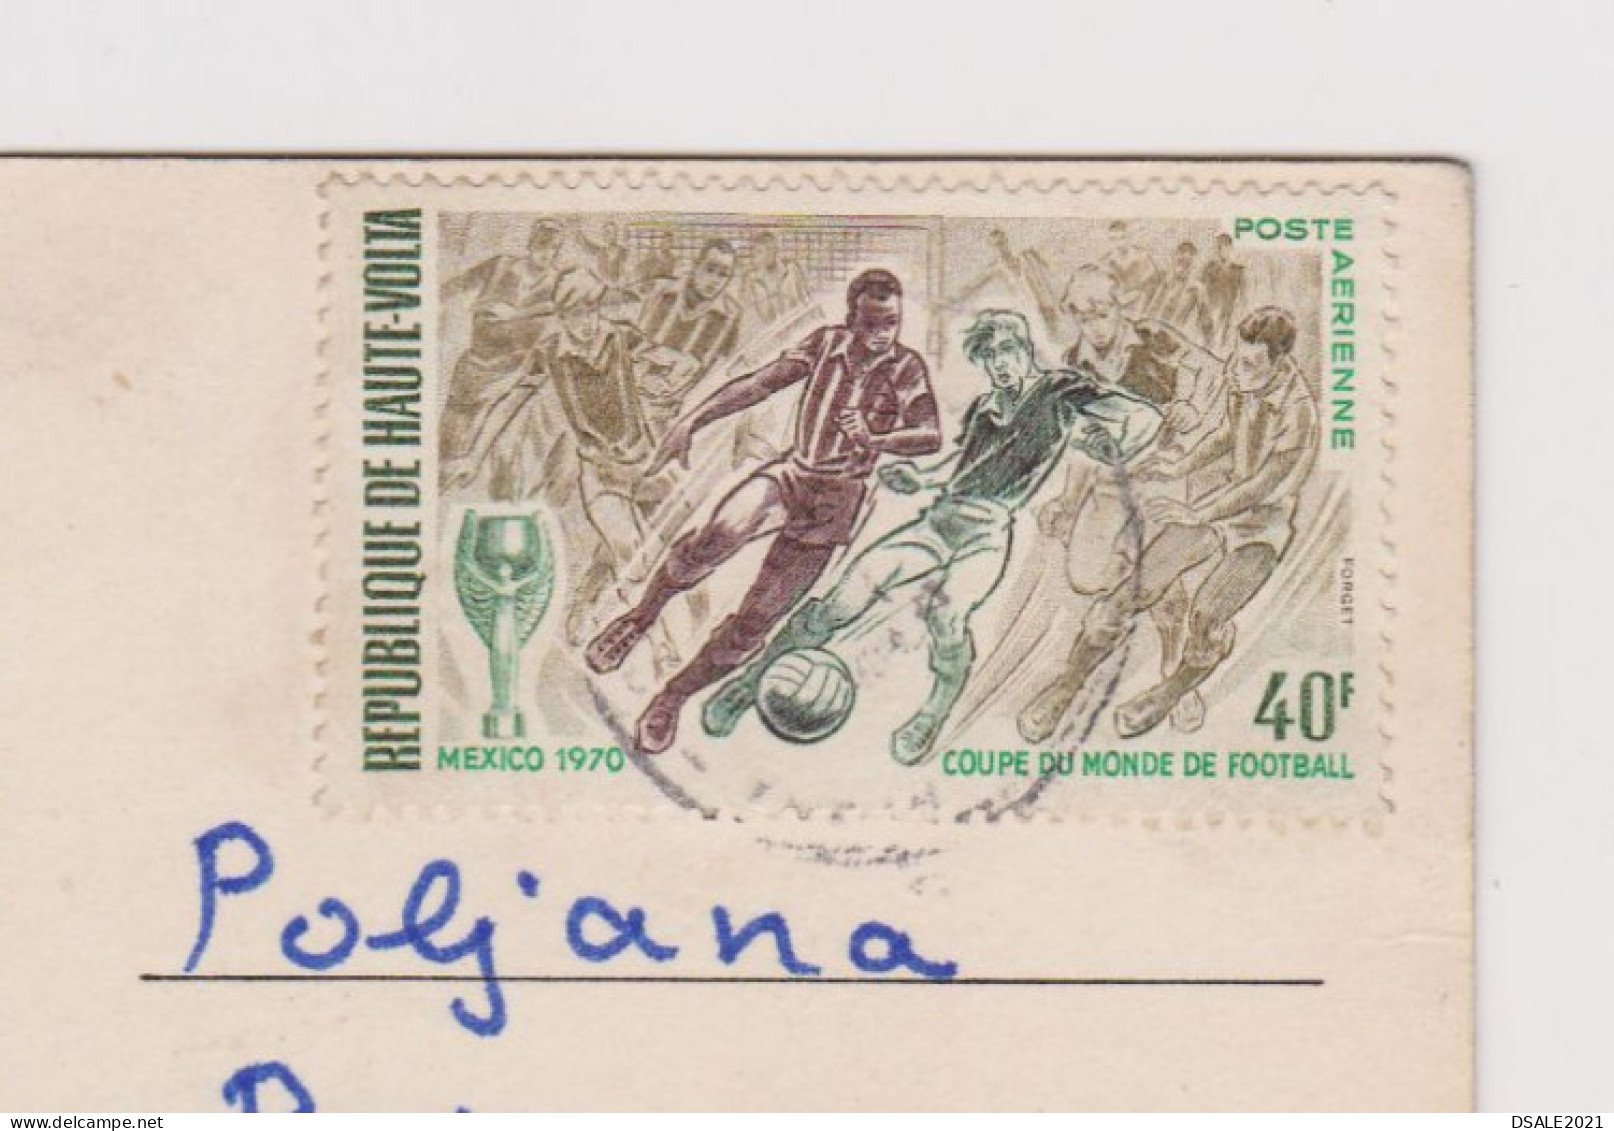 République De Haute-Volta, Republic Of Upper Volta Village Scene, RPPc W/Topic Stamp SOCCER MEXICO 1970s To Bulgaria 670 - Haute-Volta (1958-1984)